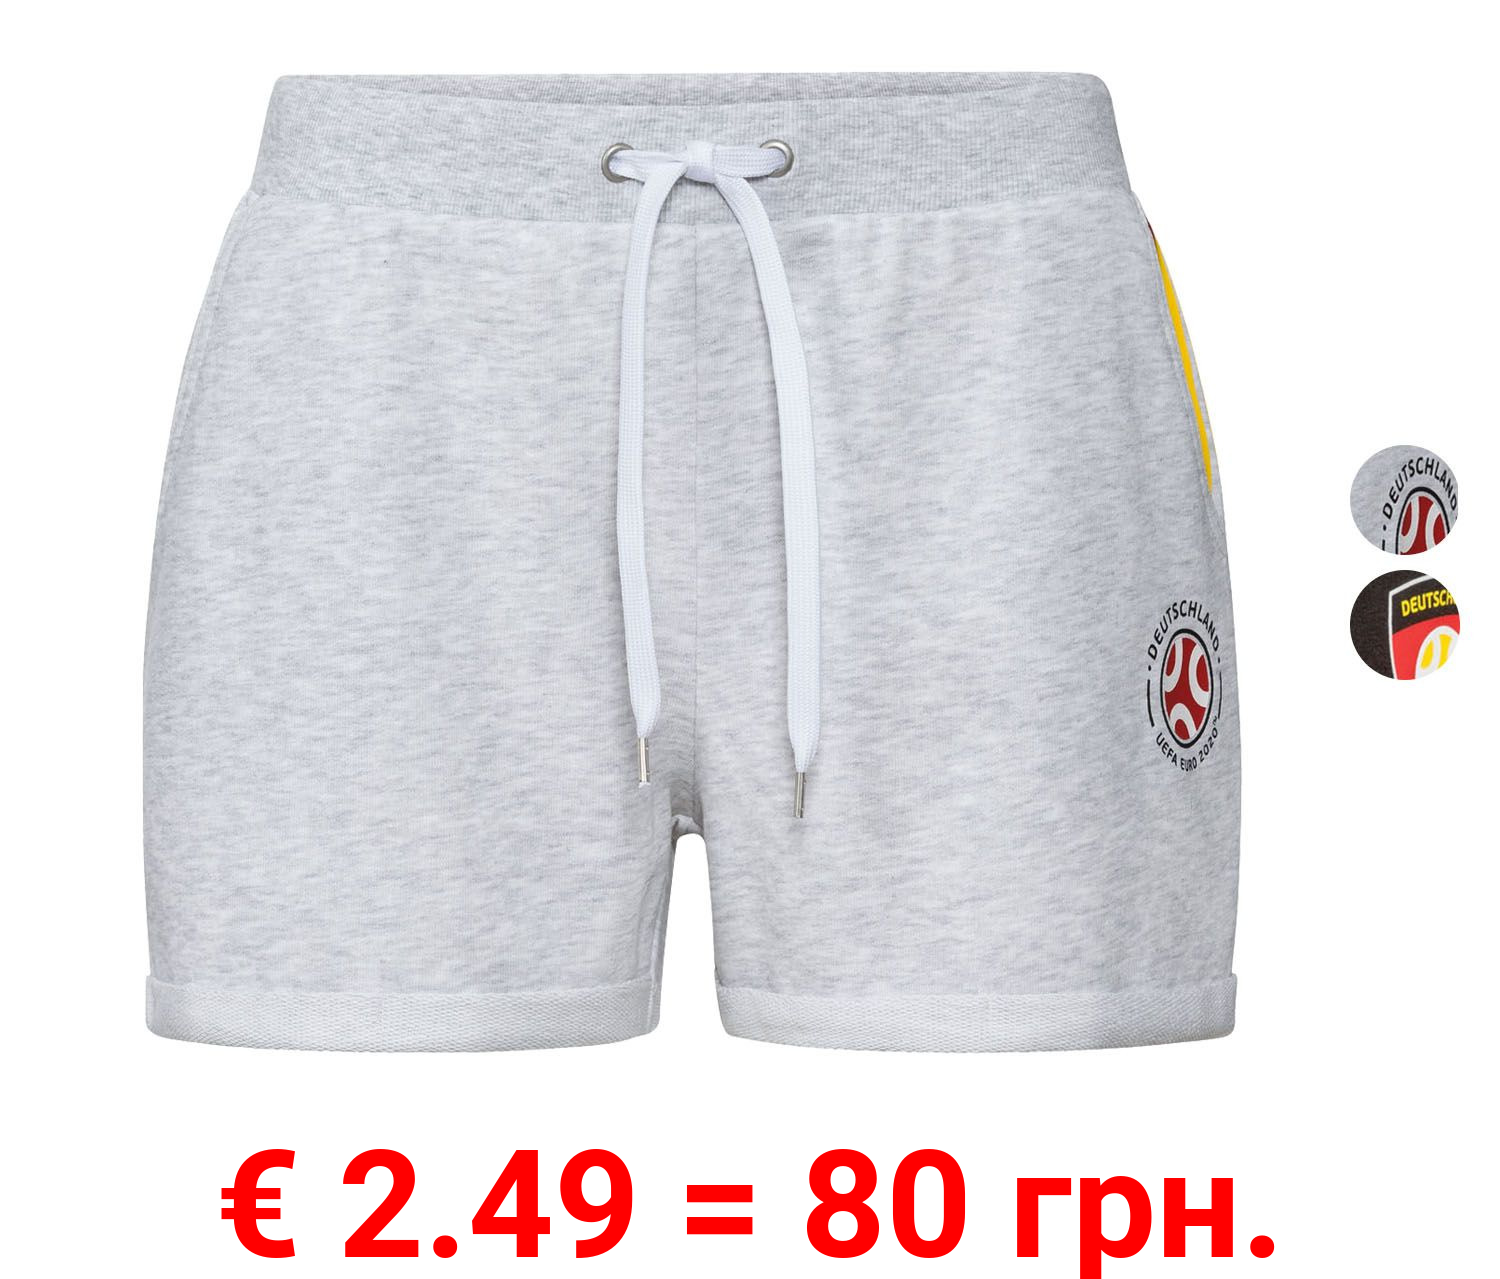 Hot Pants Damen, Deutschland, UEFA Fußball-EM